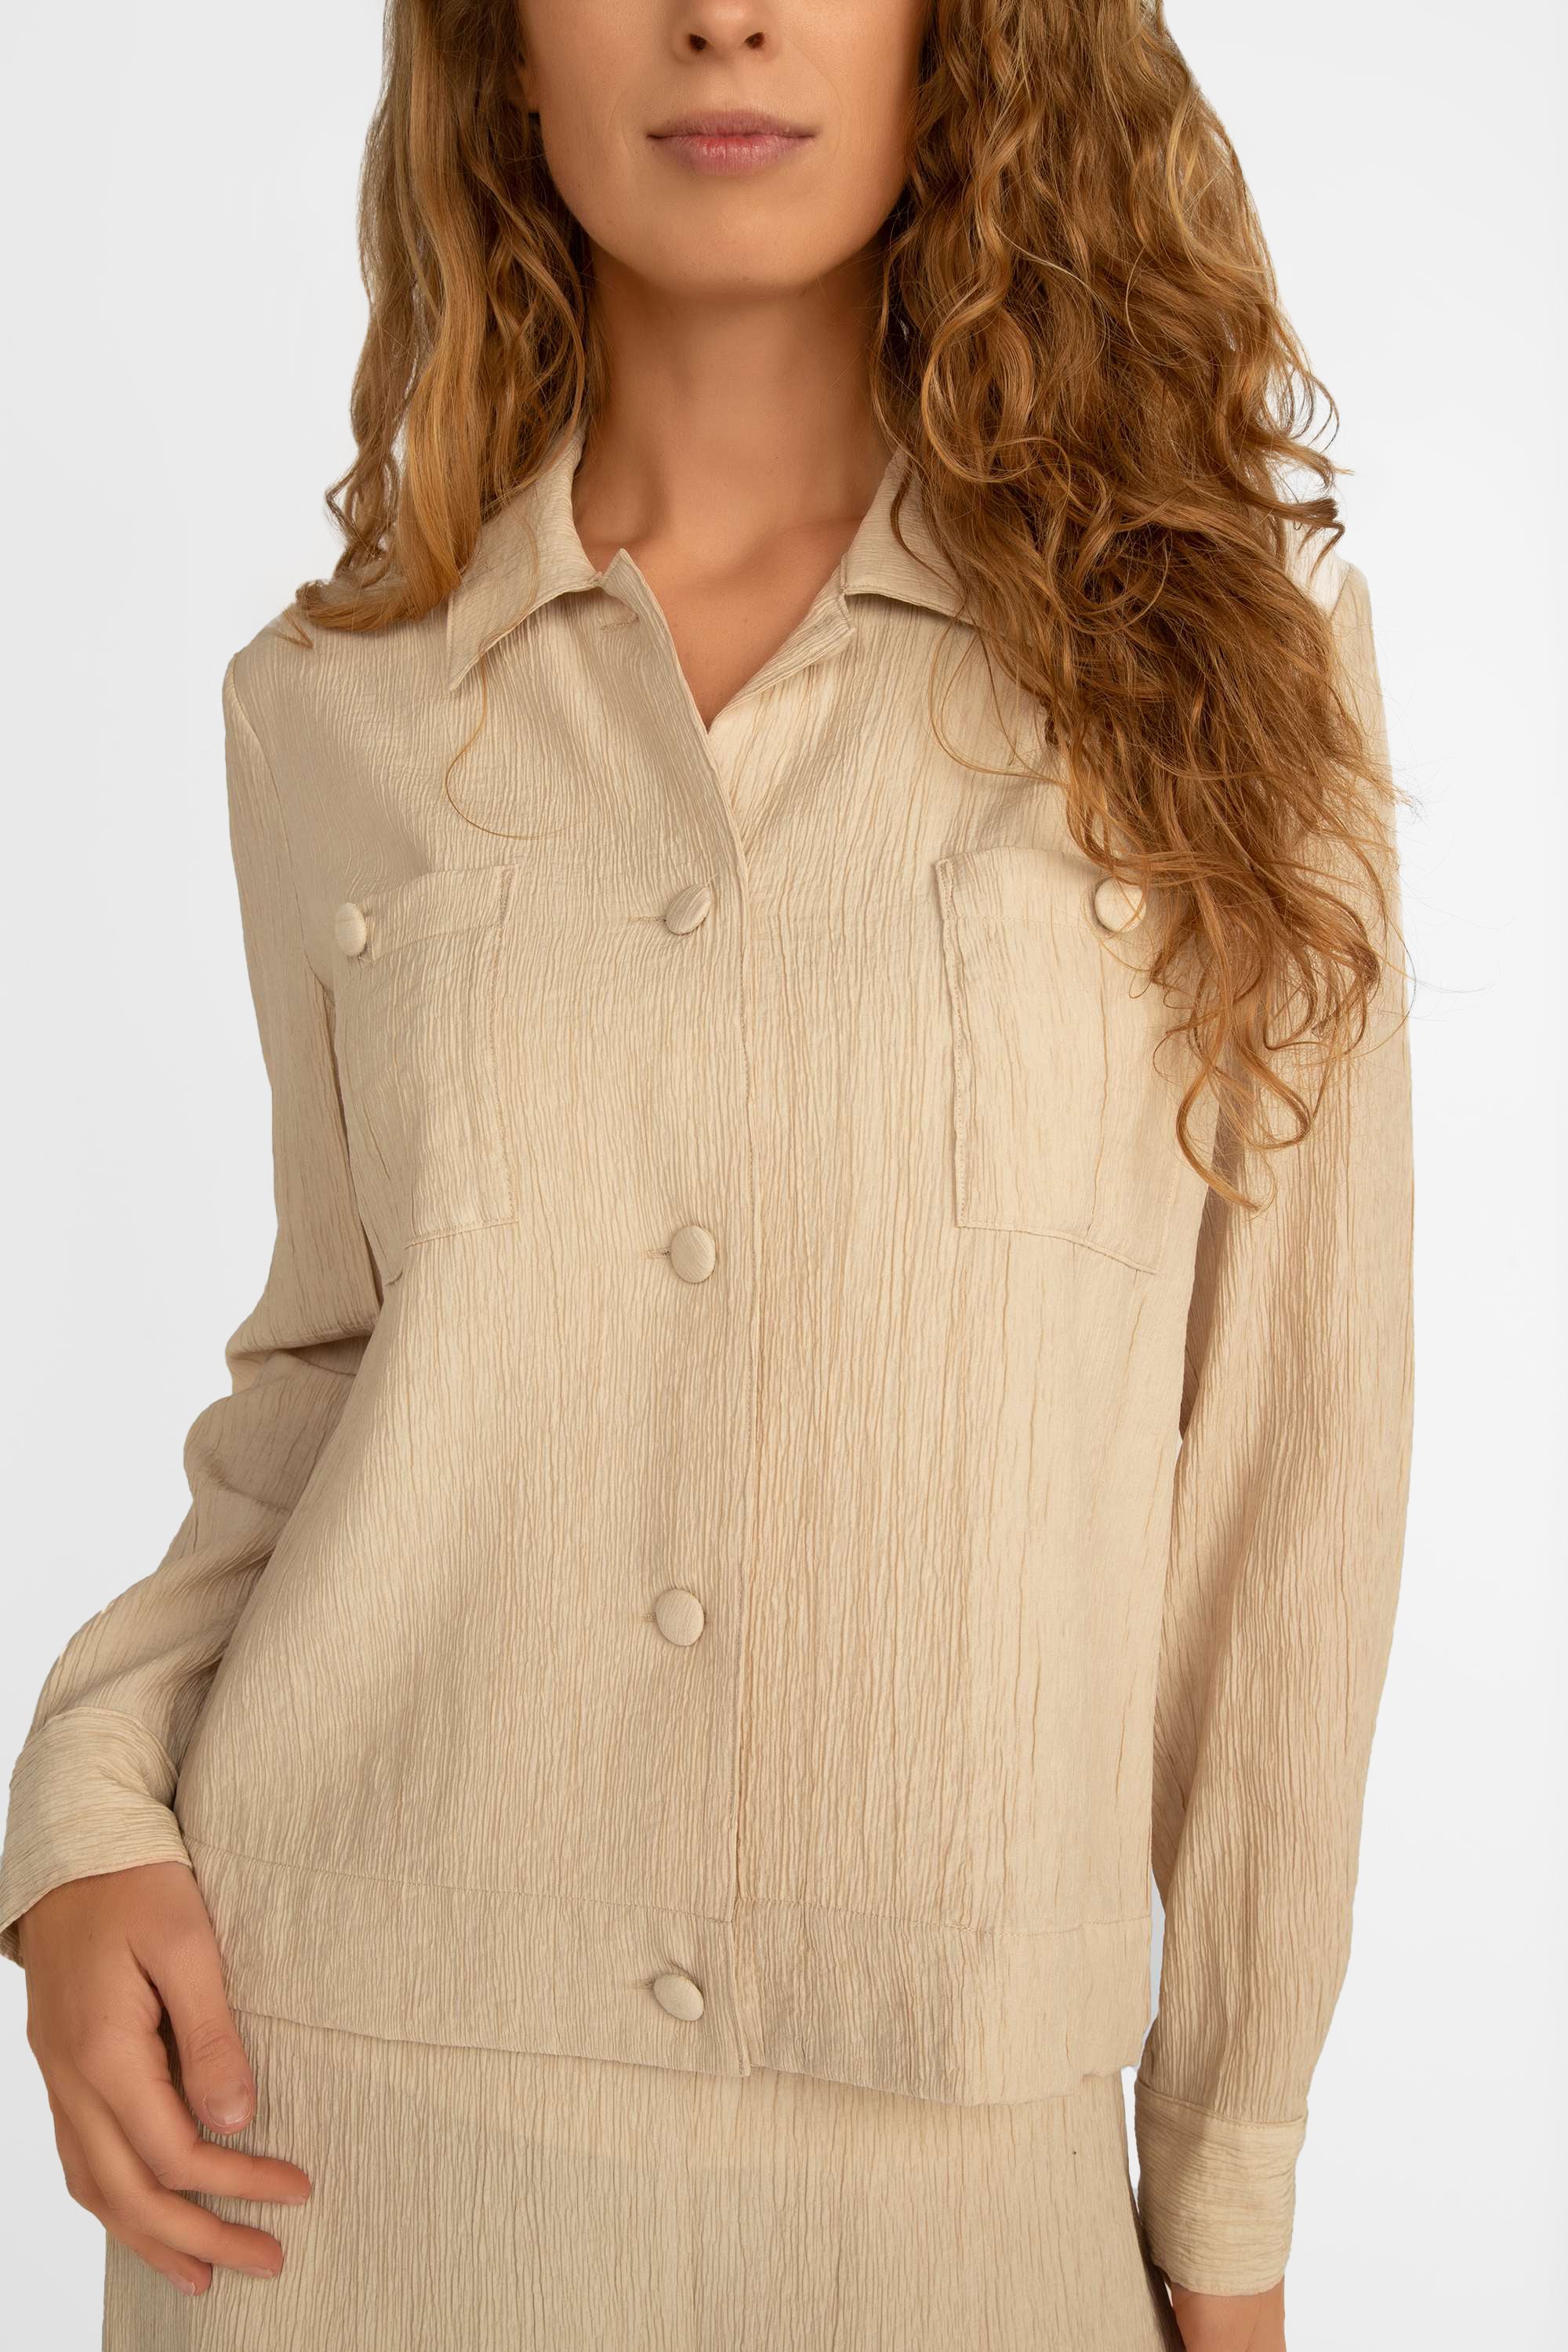 Picadilly (JM581) Women's Long Sleeve Button Front Textured Viscose Jacket in Milk Tea Beige